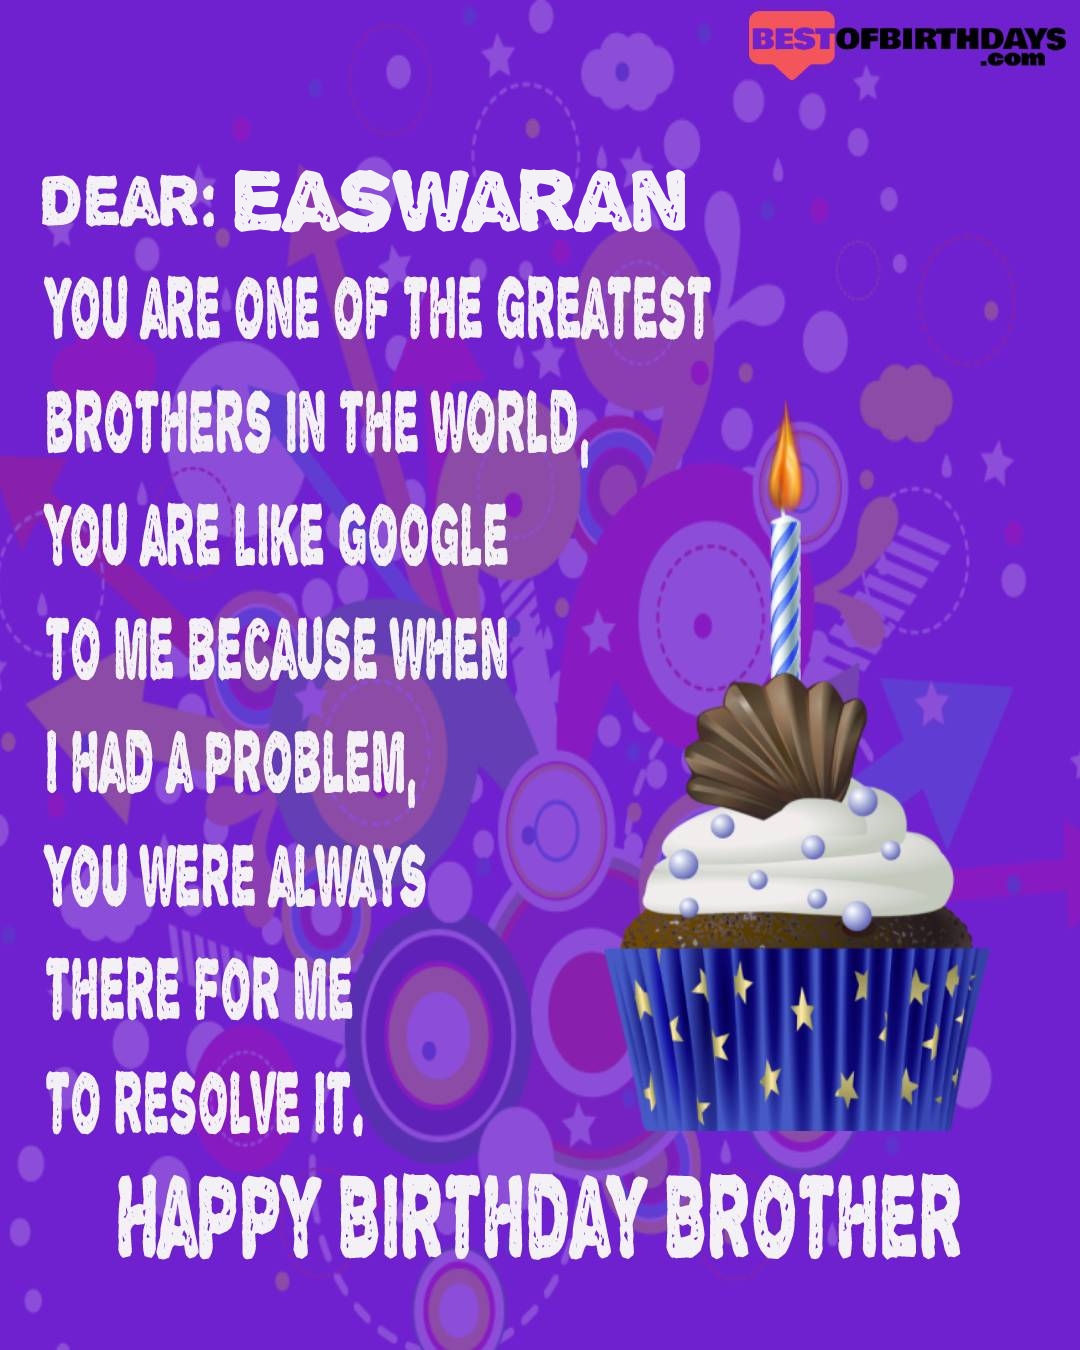 Happy birthday easwaran bhai brother bro